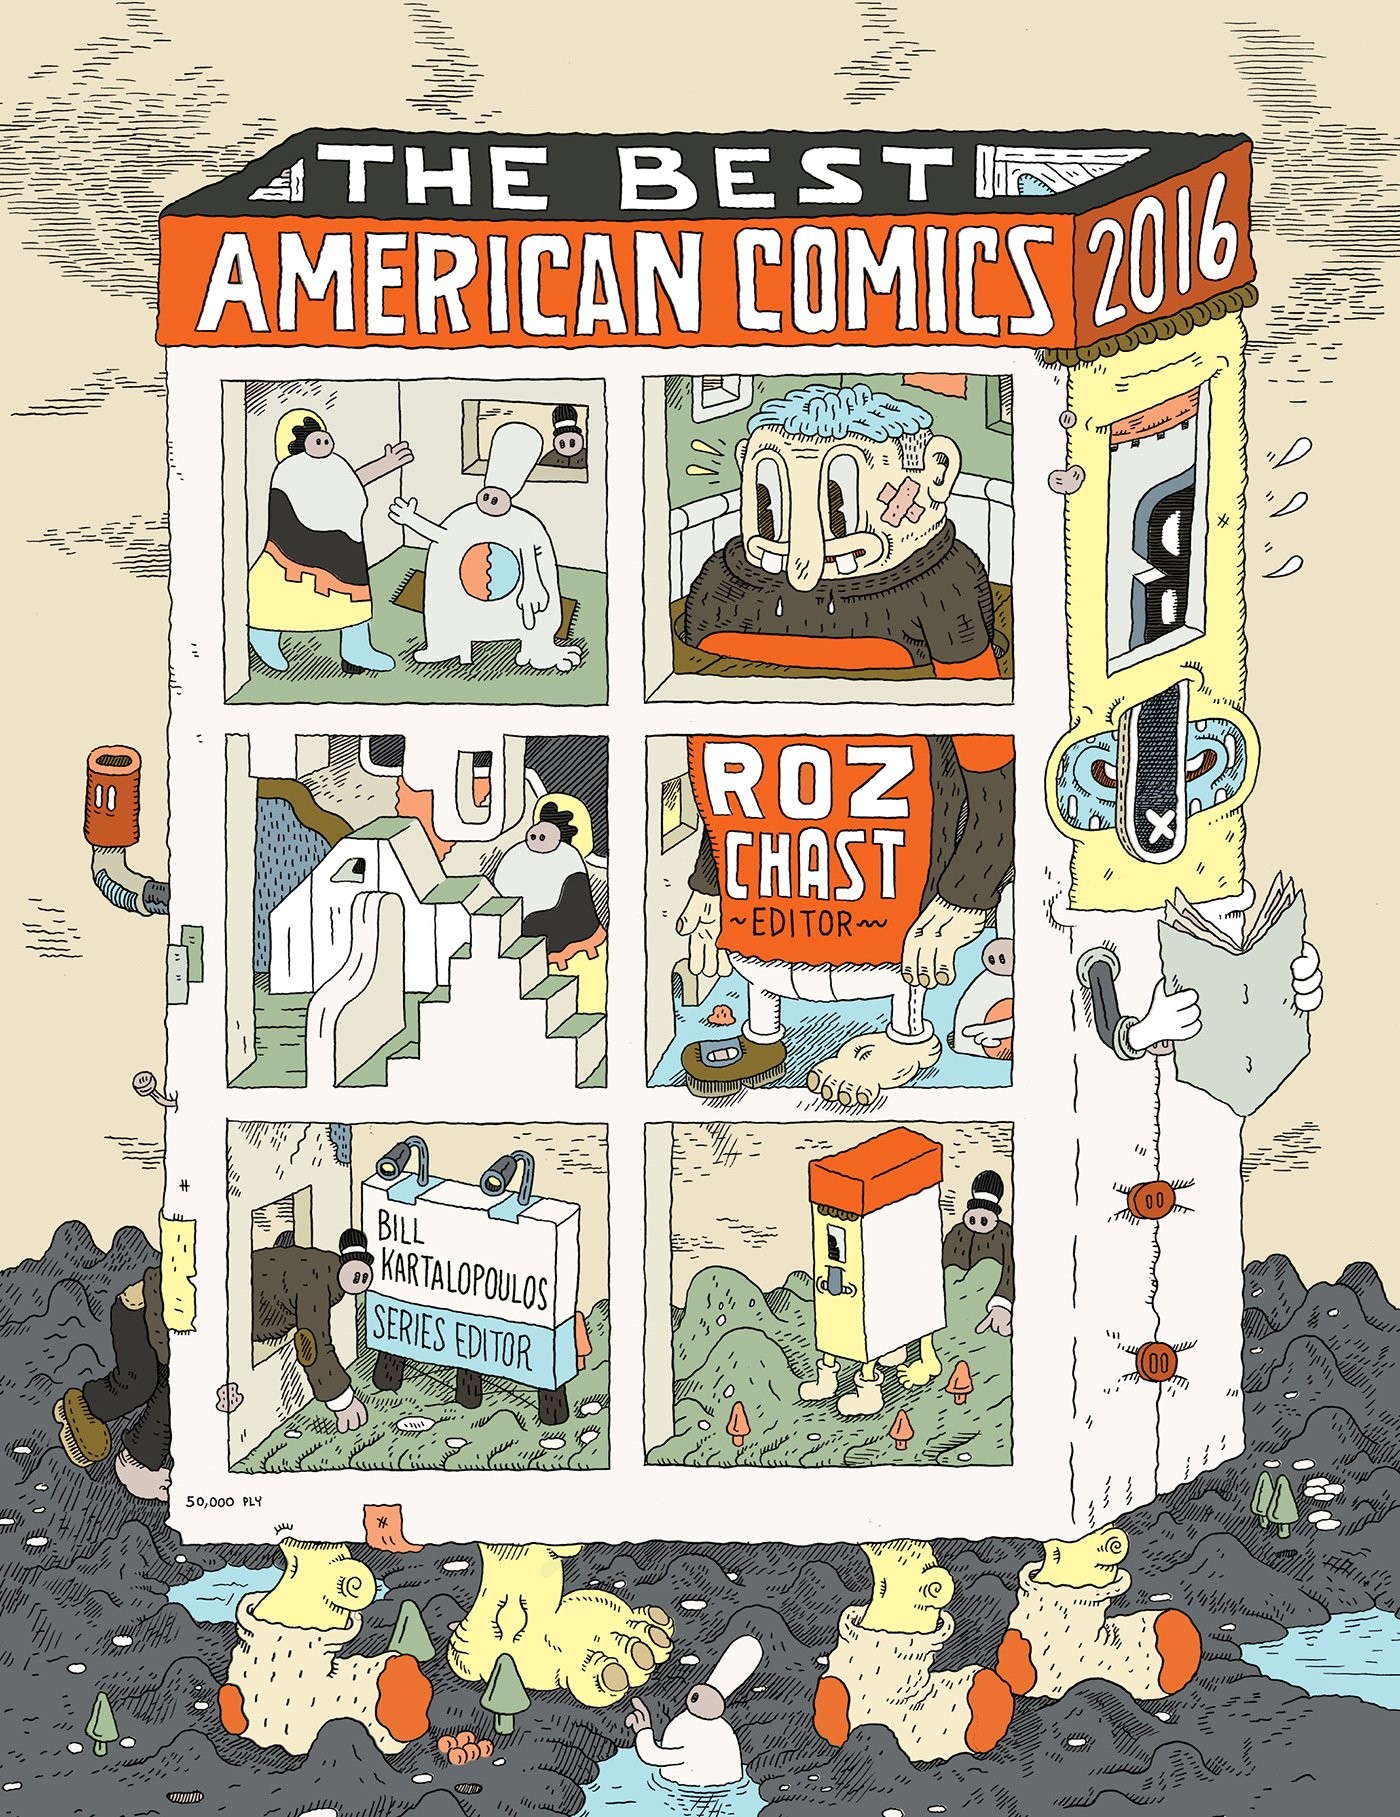 The Best American Comics 2016: a capa da coletânea editada por Roz Chast